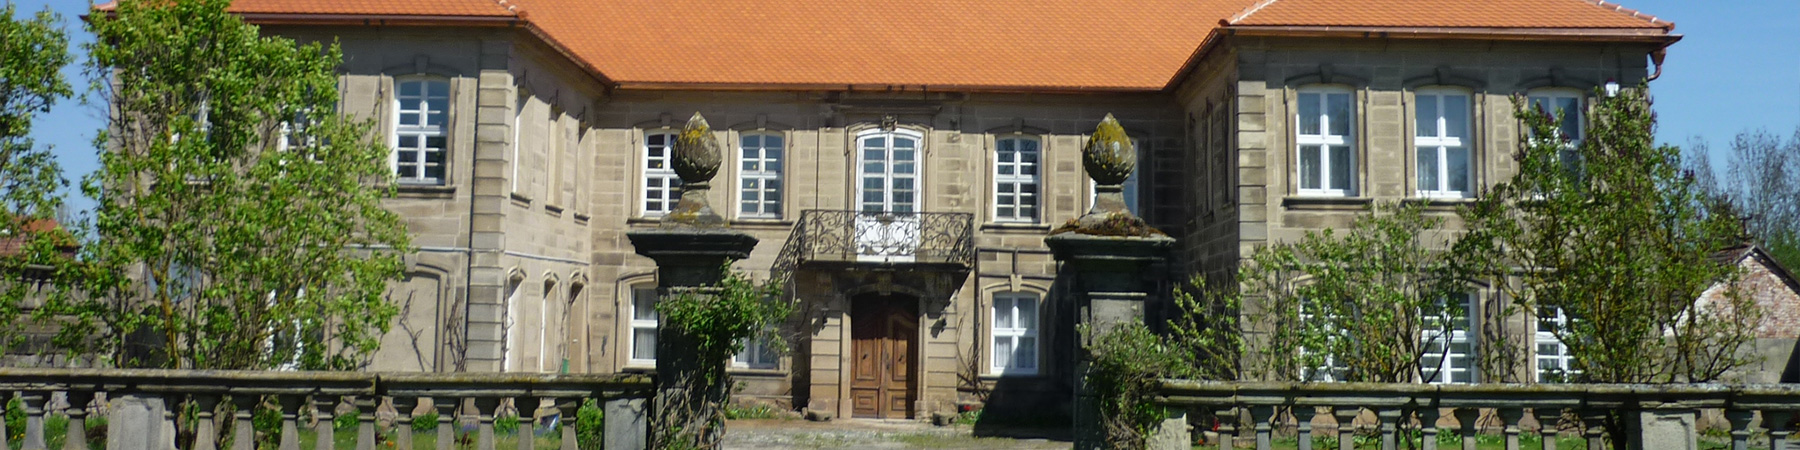 Schloss Colmdorf Bayreuth - locations